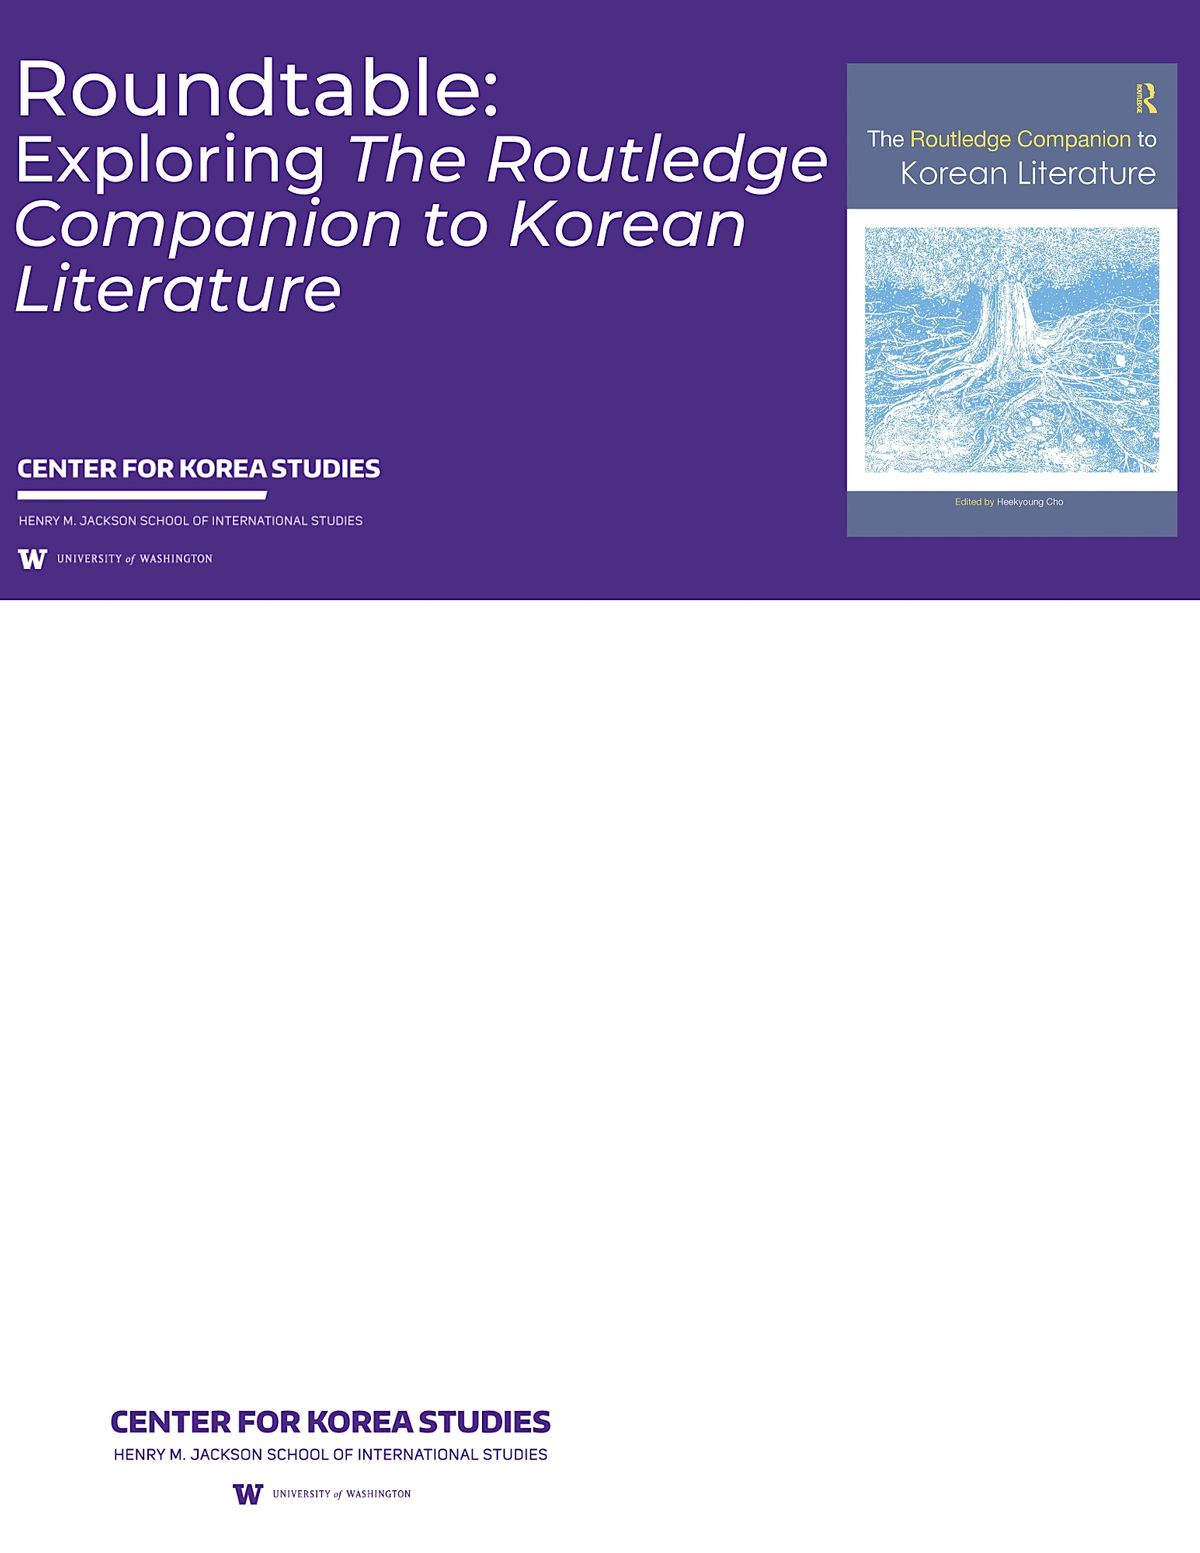 Roundtable: Exploring The Routledge Companion to Korean Literature